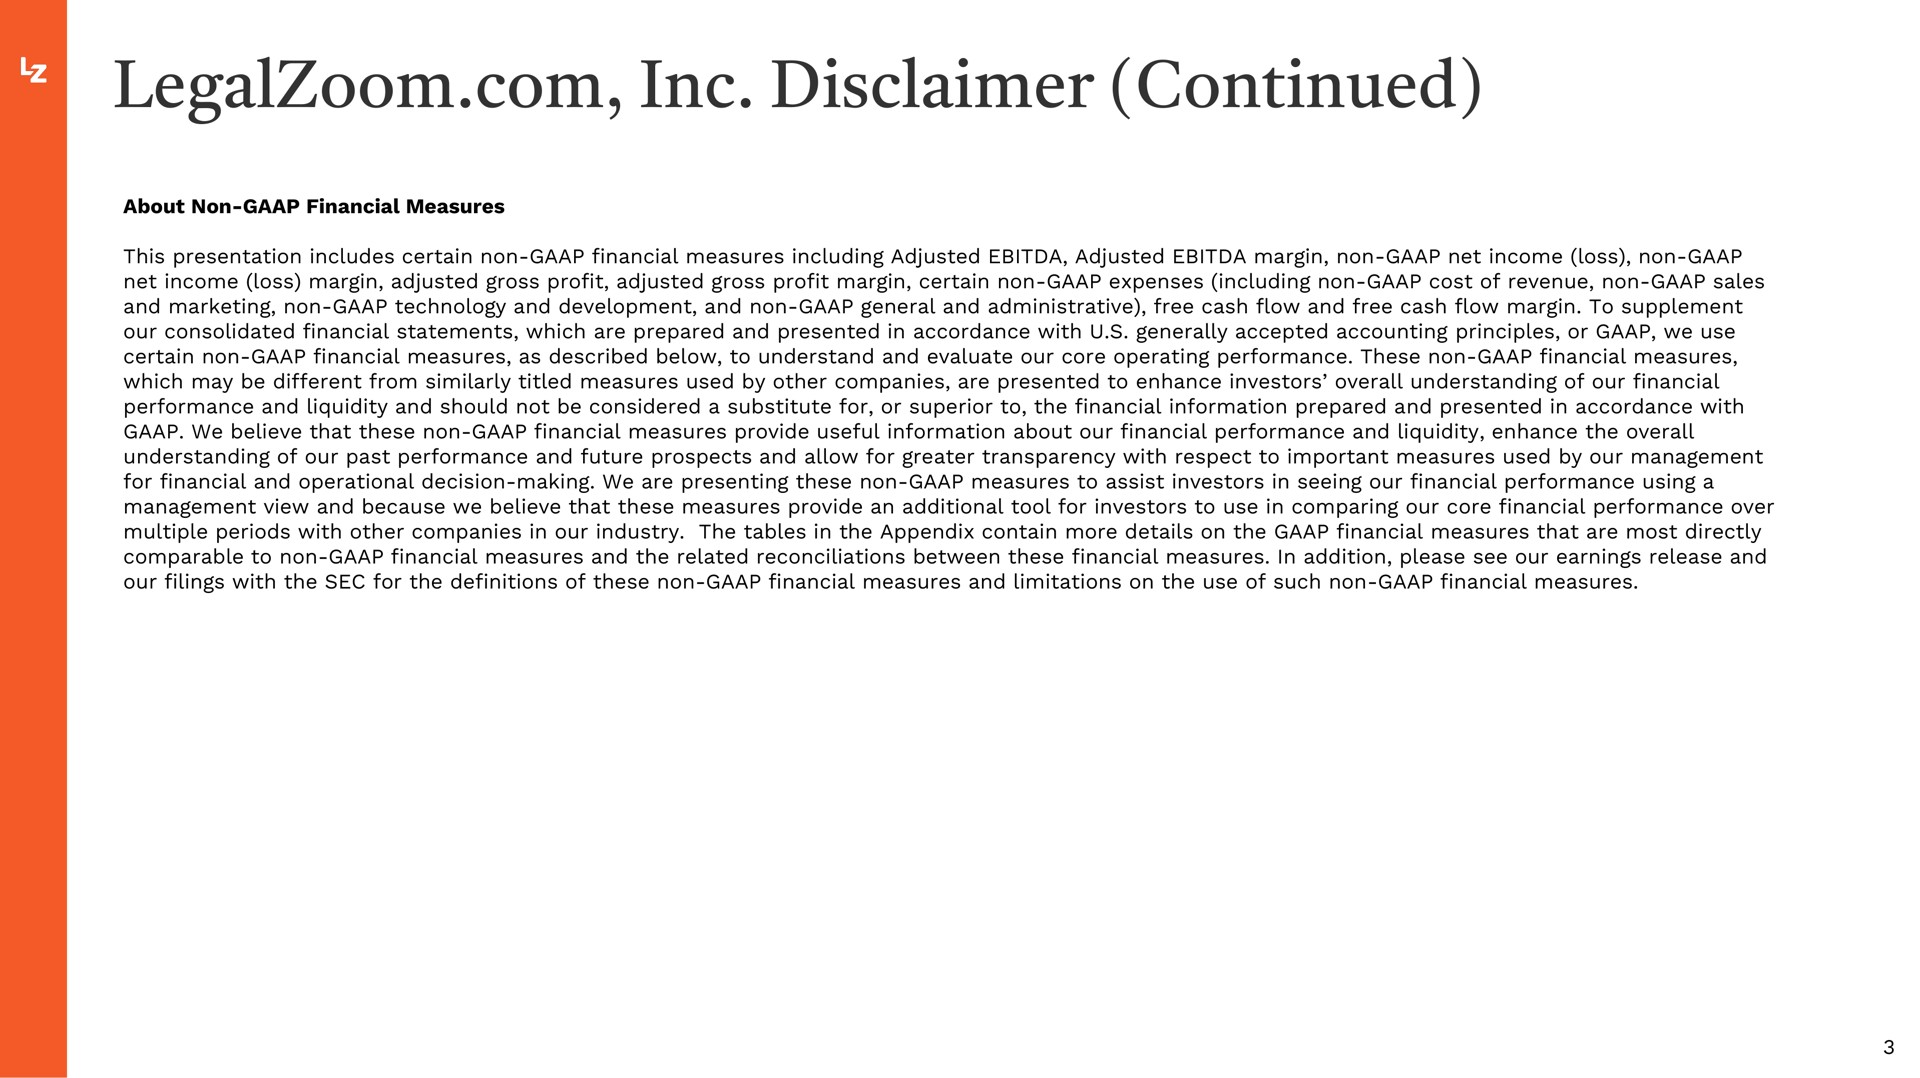 disclaimer continued | LegalZoom.com